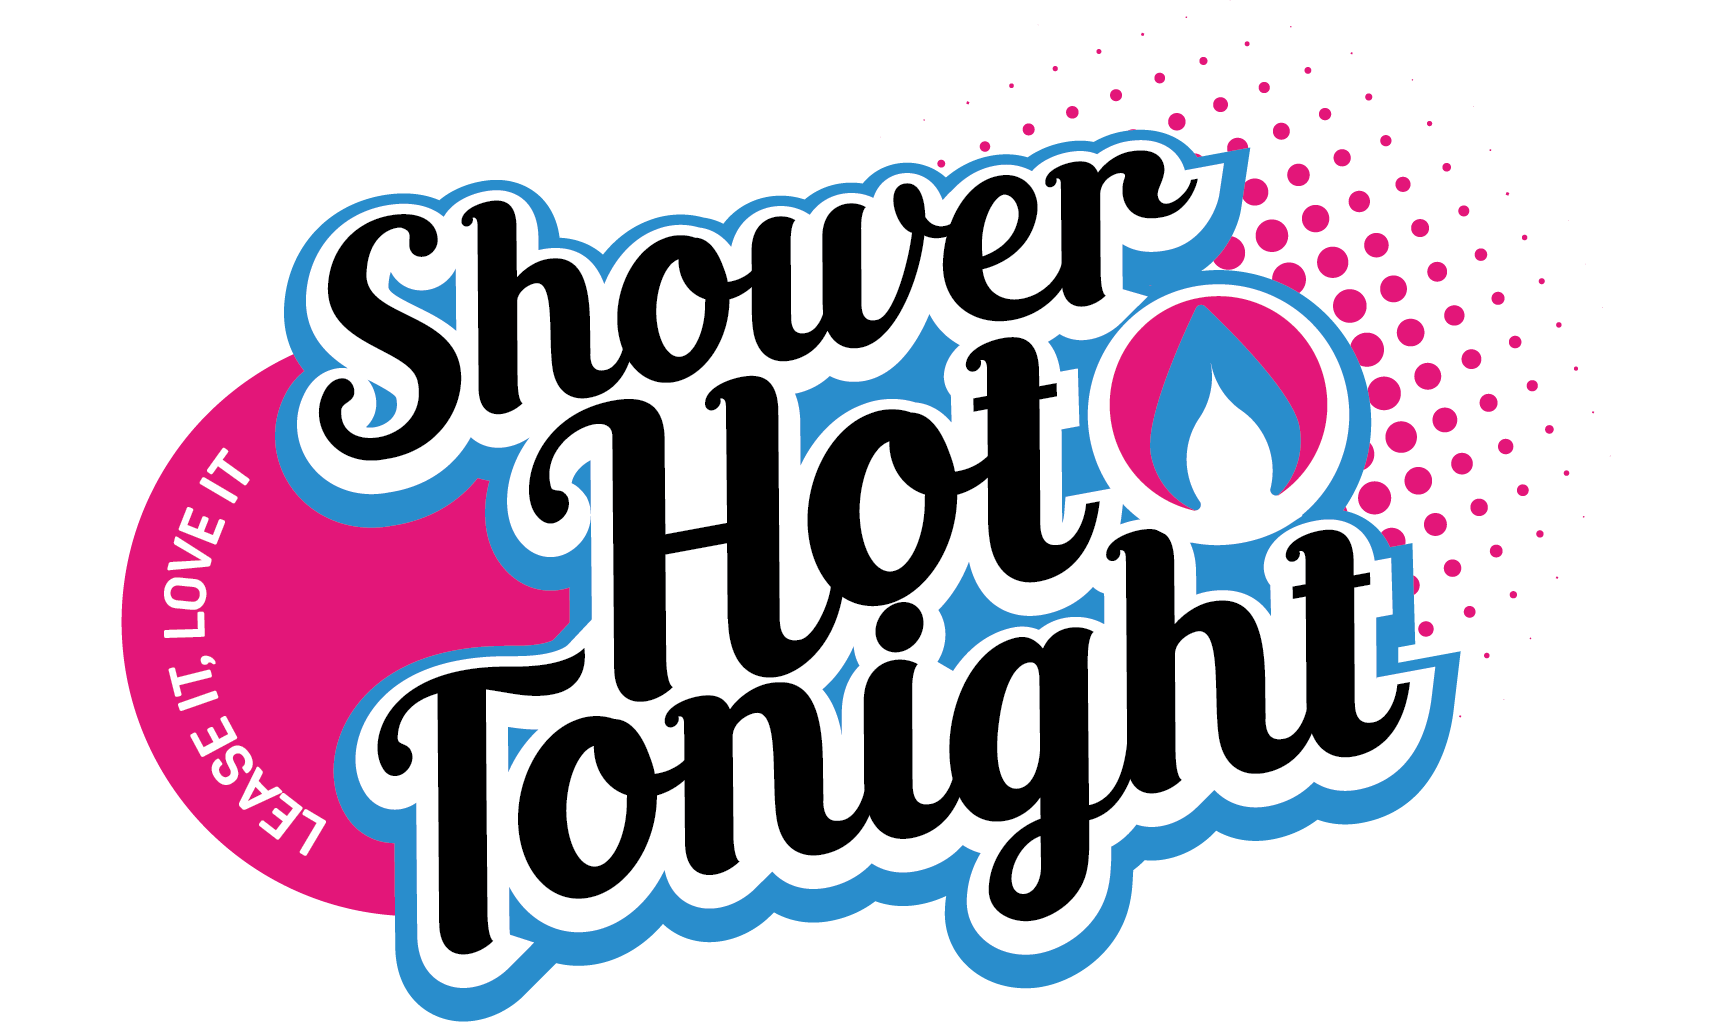 Shower Hot Tonight